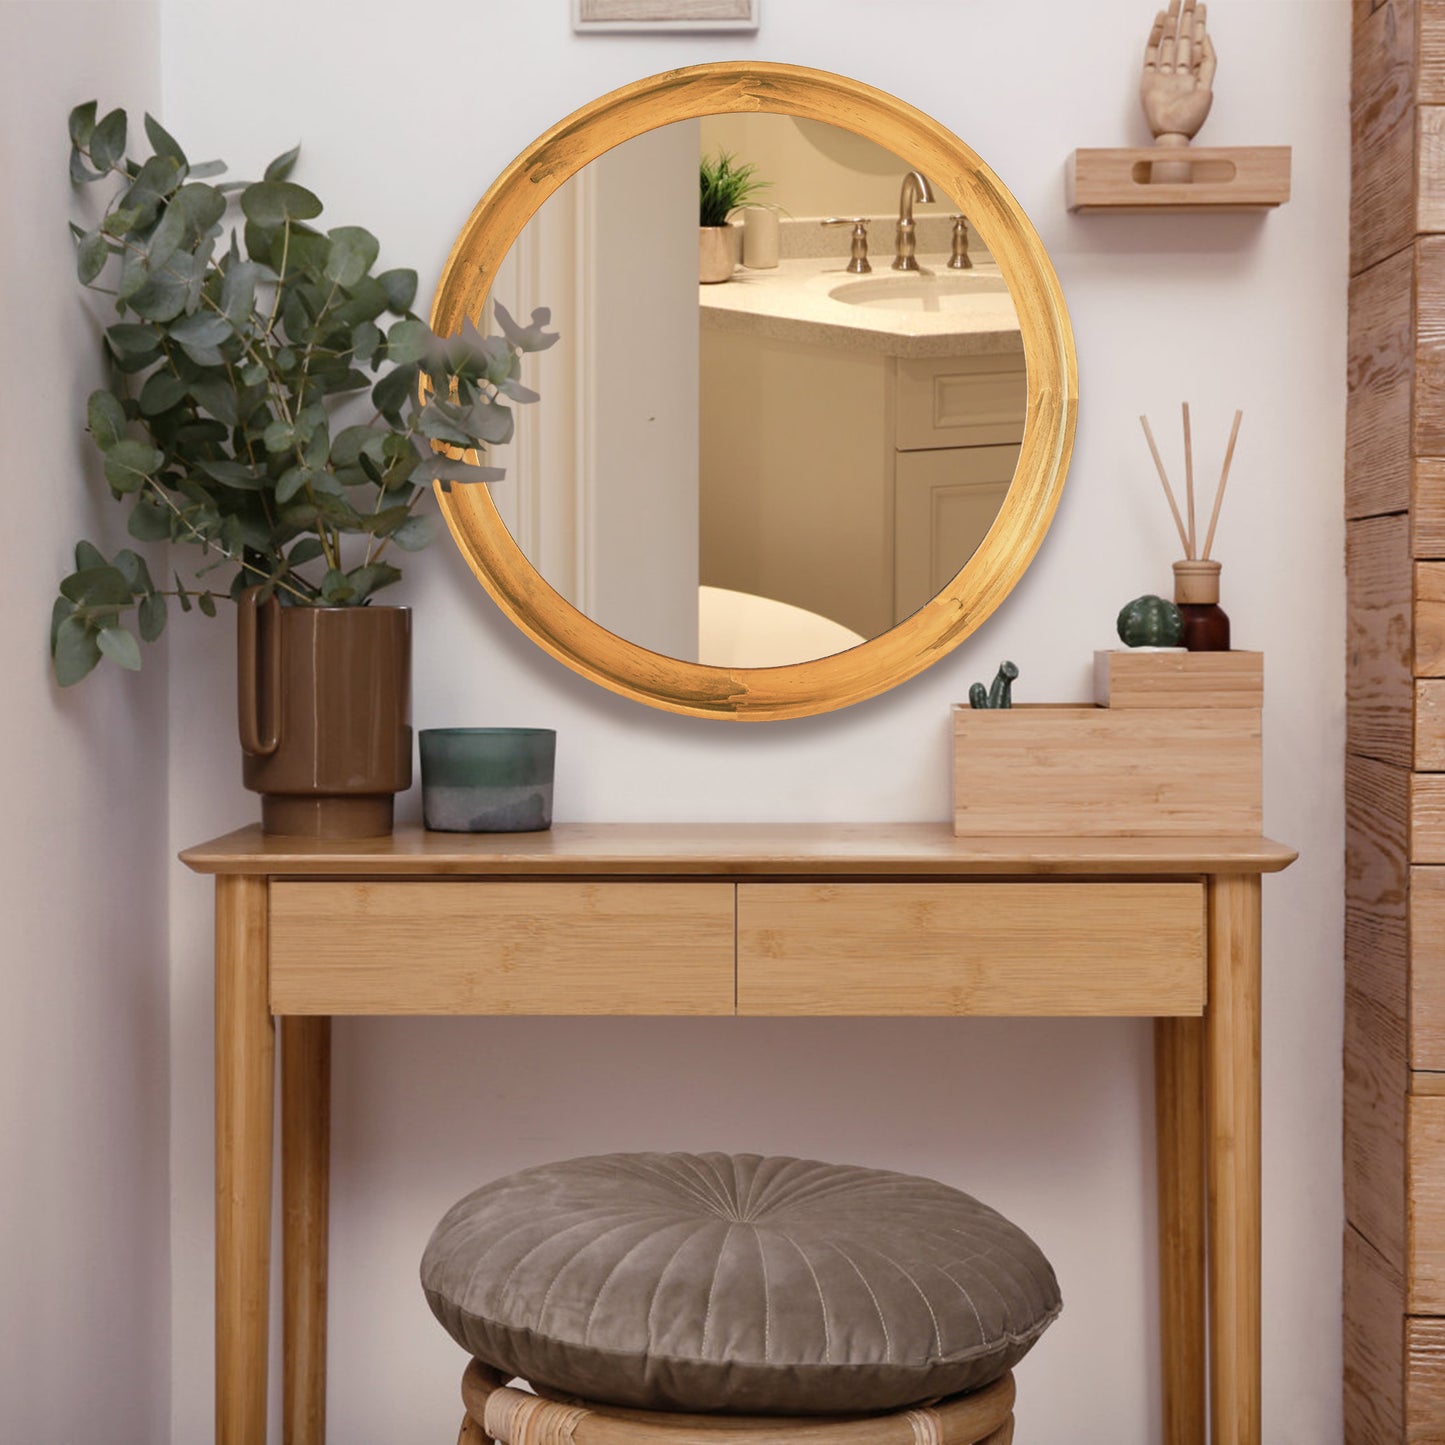 JIYUERLTD 35cm Wall Mirror Wood Retro Round Mirror Decorative HD Mirror for Bathroom Entryways Living Rooms and Powder Room,Bedroom